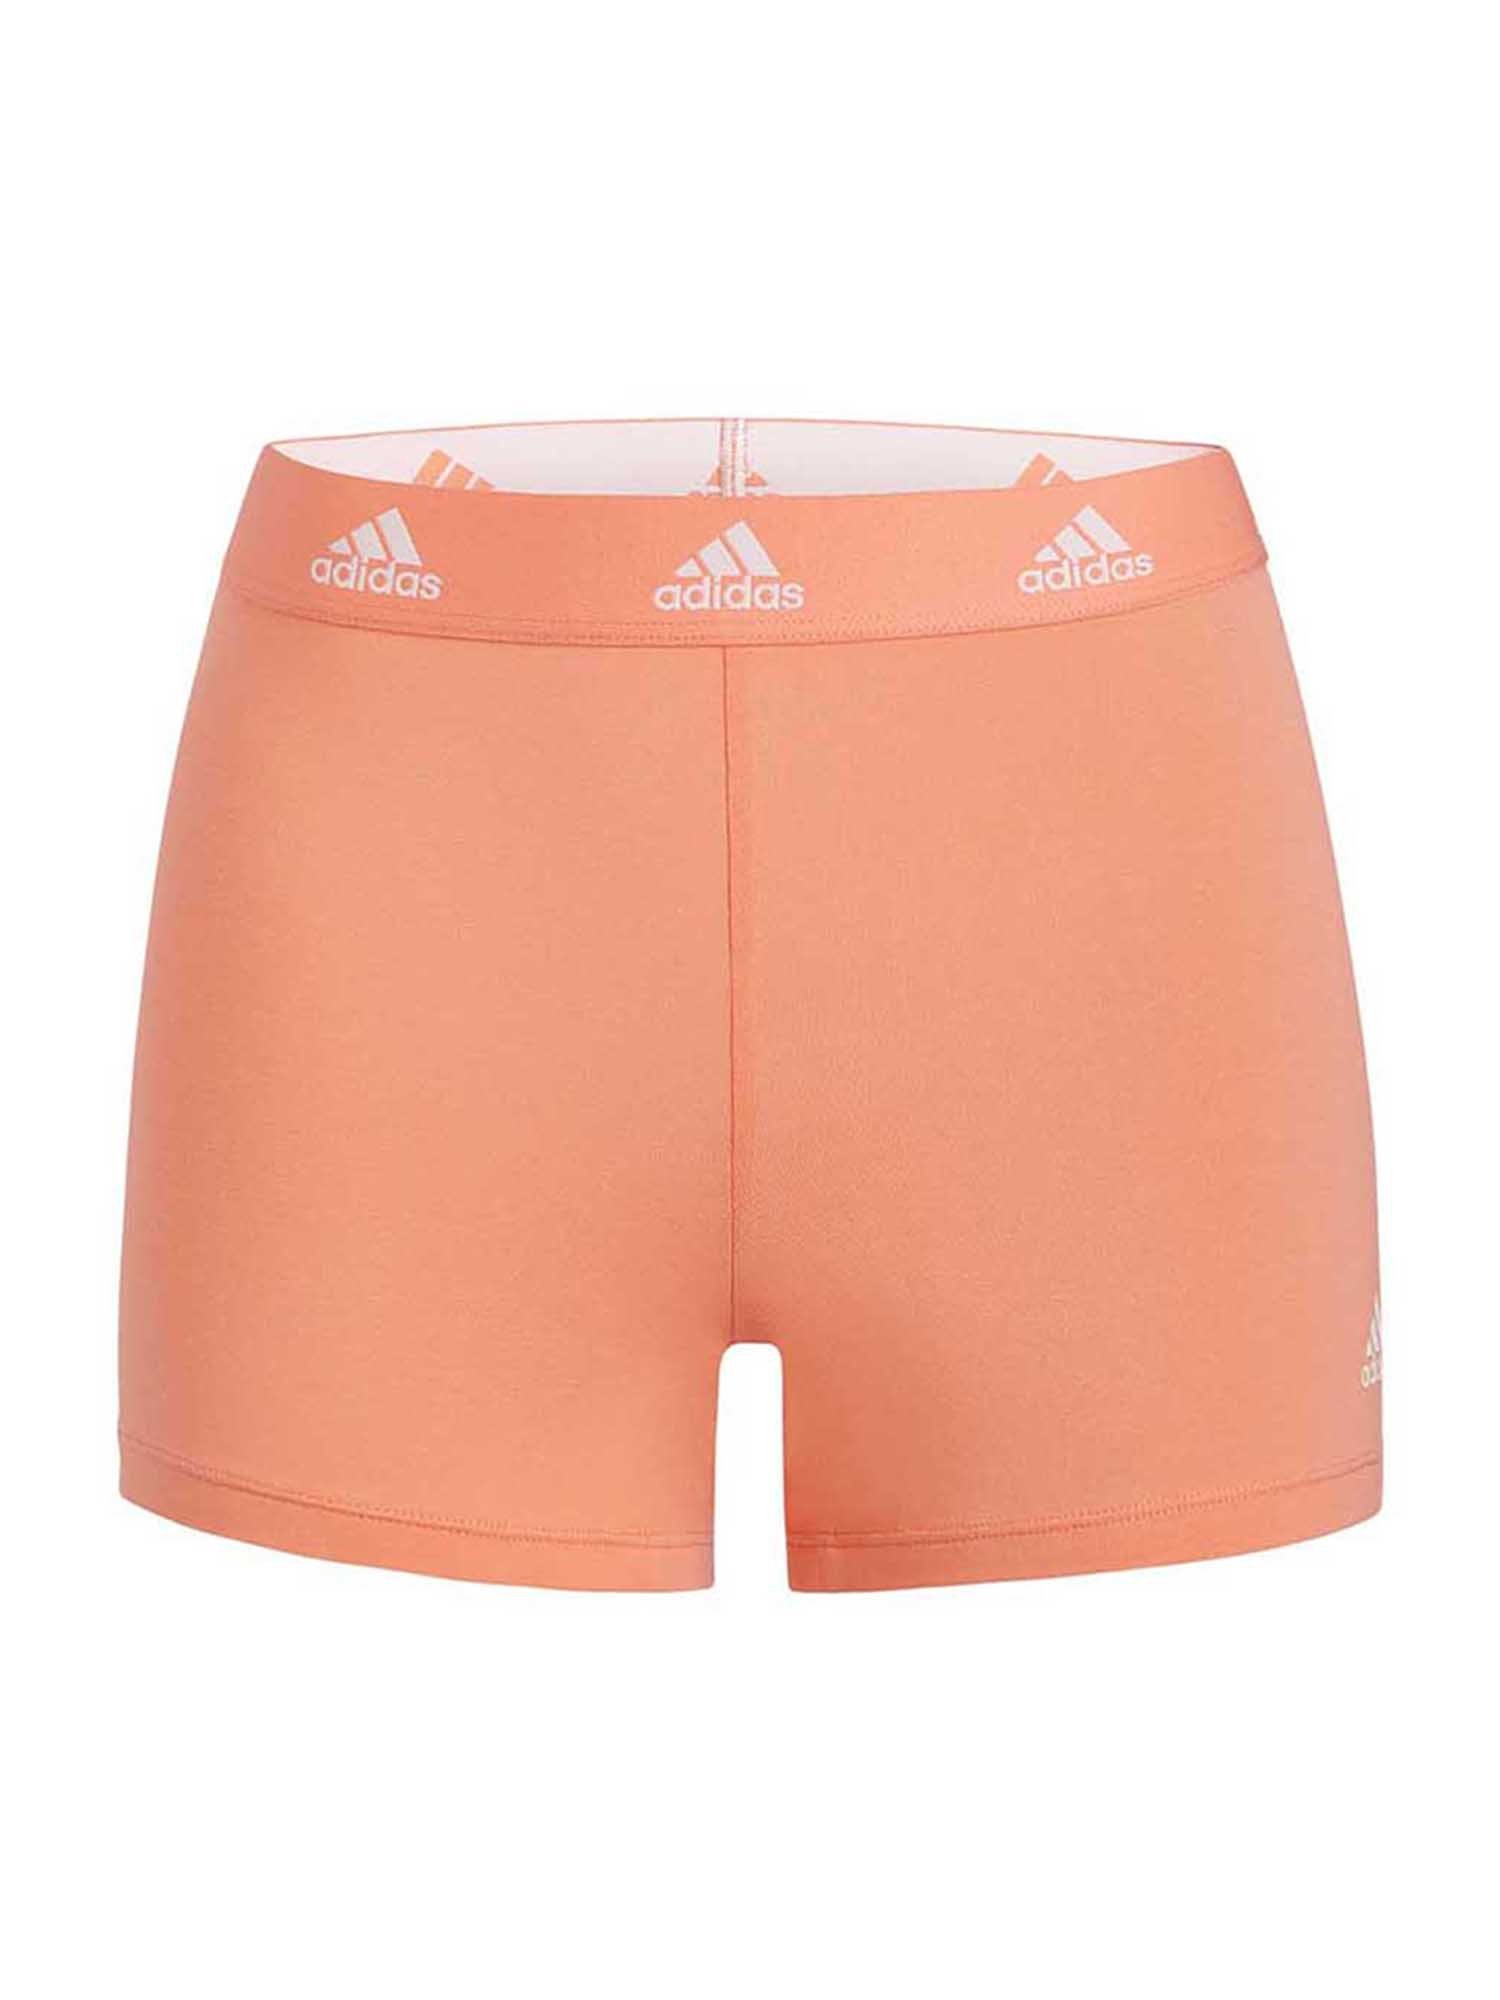 adidas Sportswear Shorts Sport Active Comfort Cotton Bermudas Kurze Hose